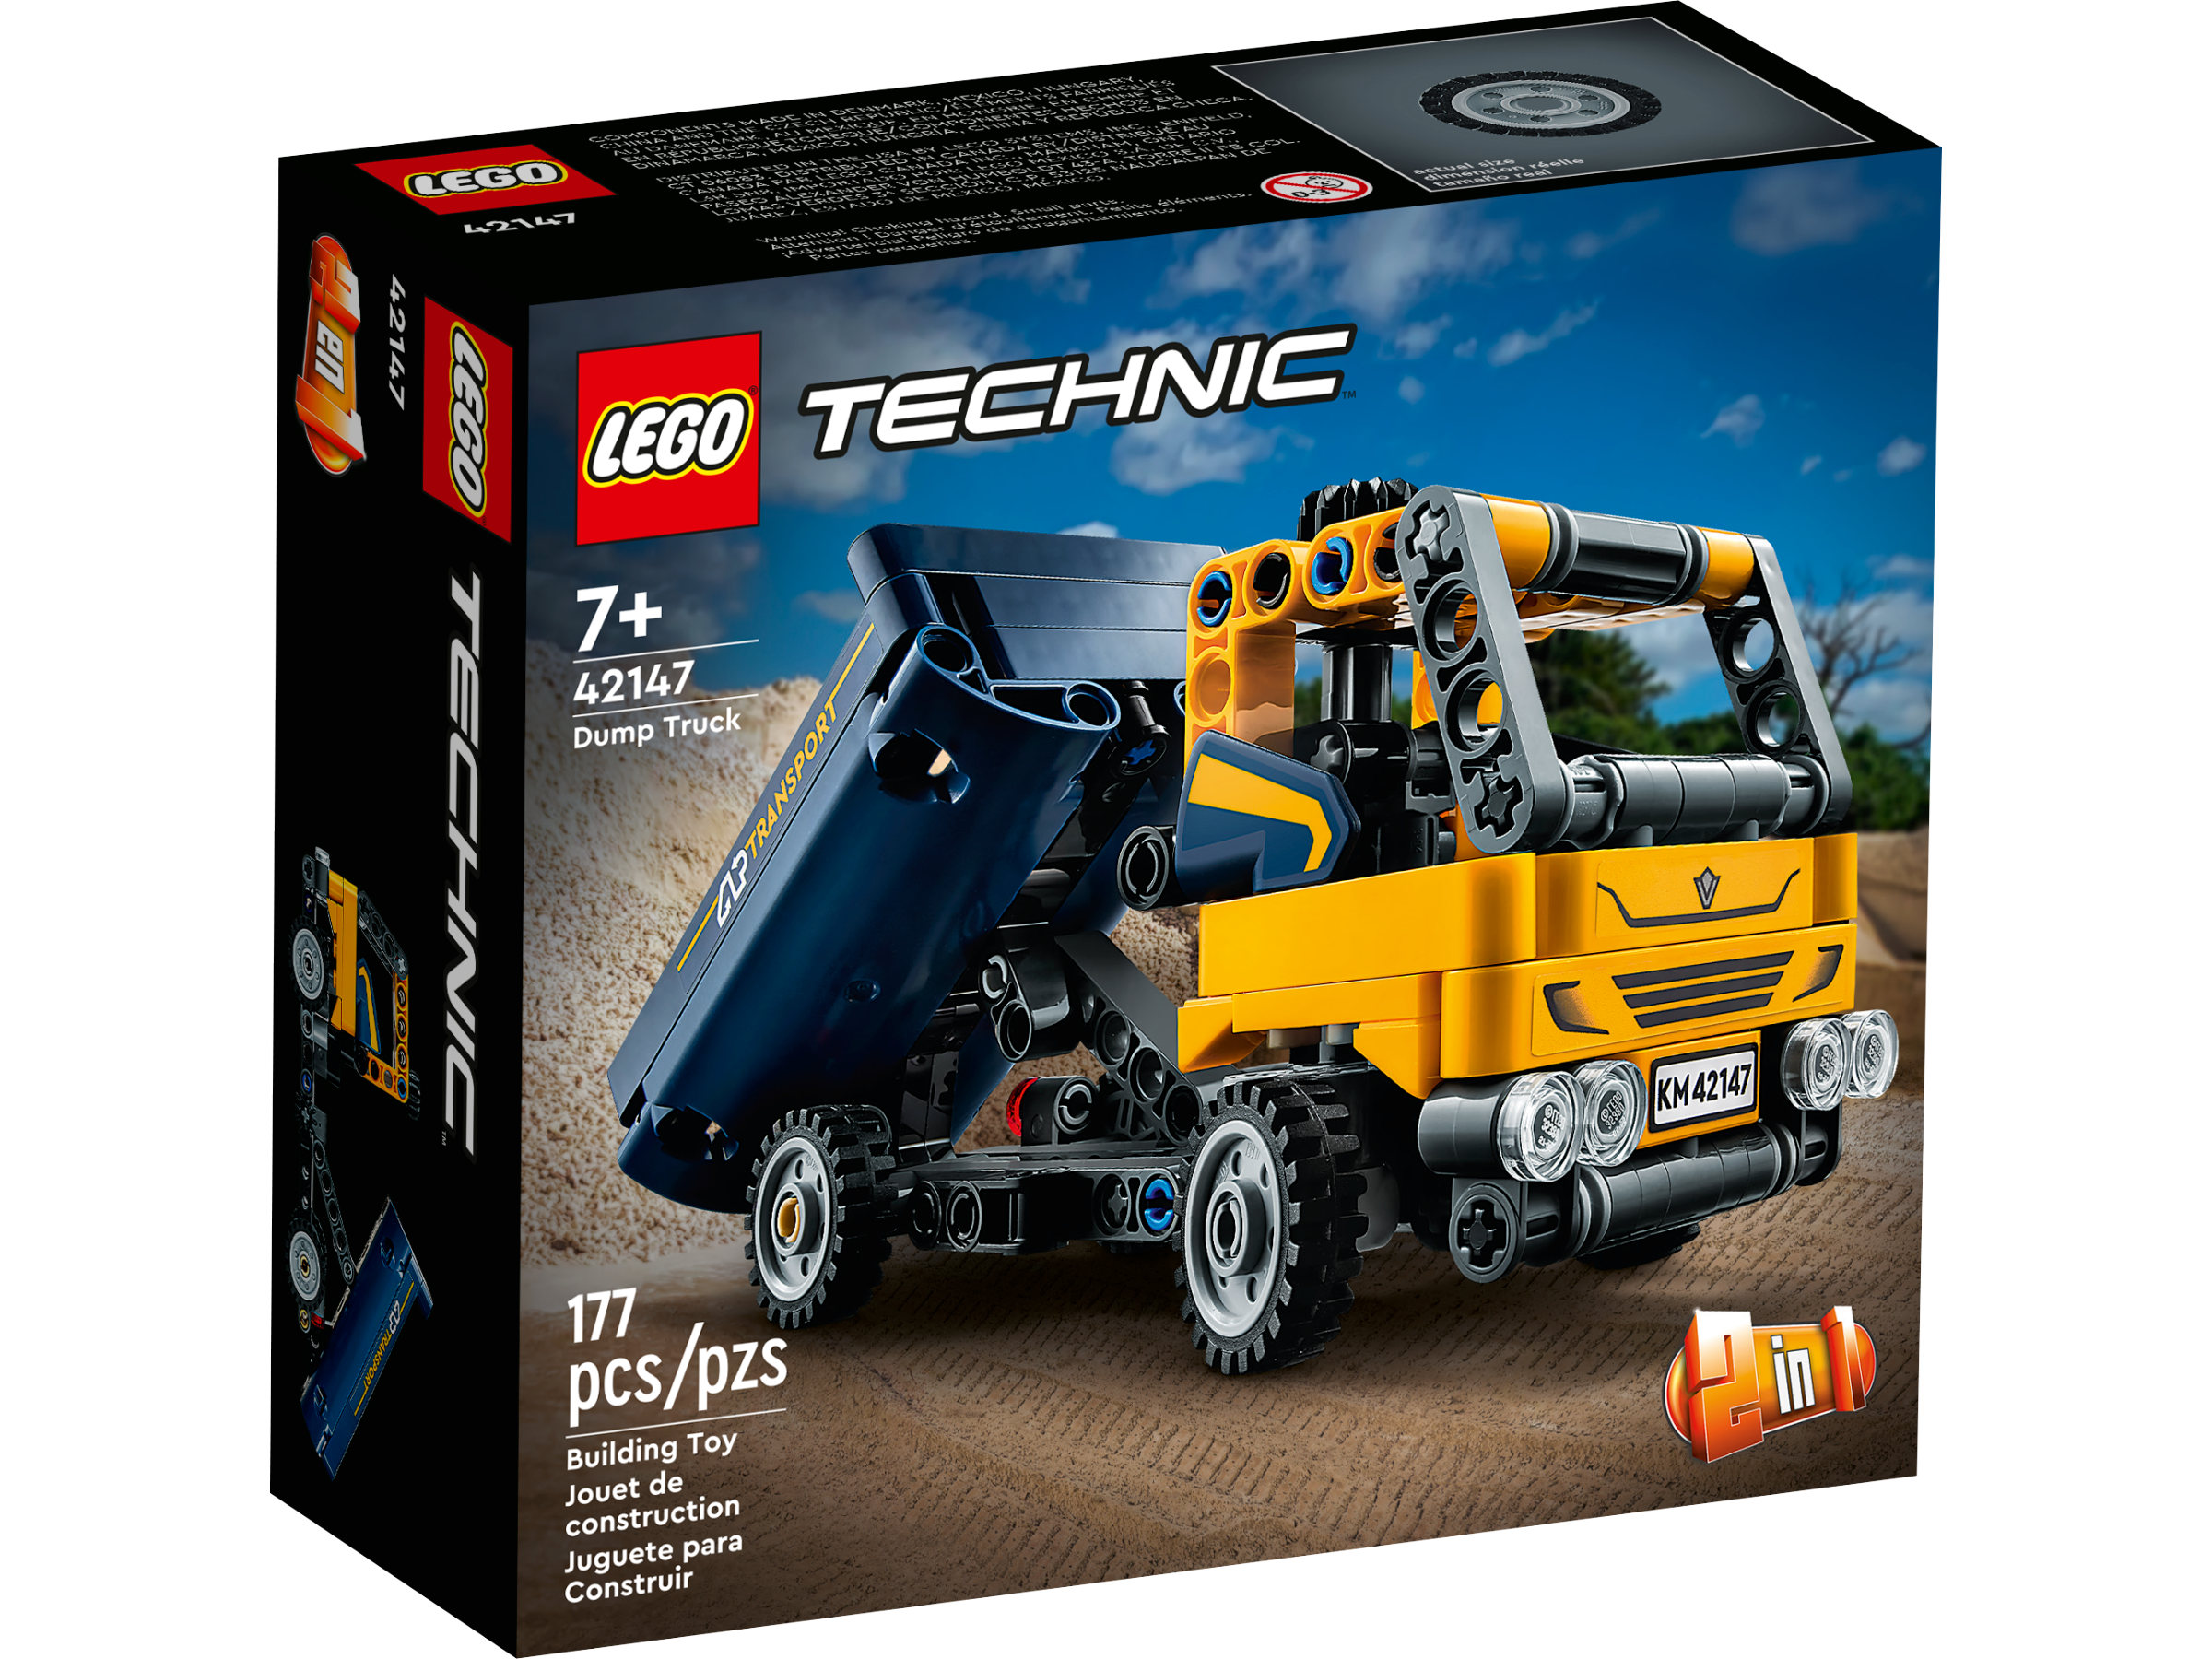 Dump Truck 42147, Technic™